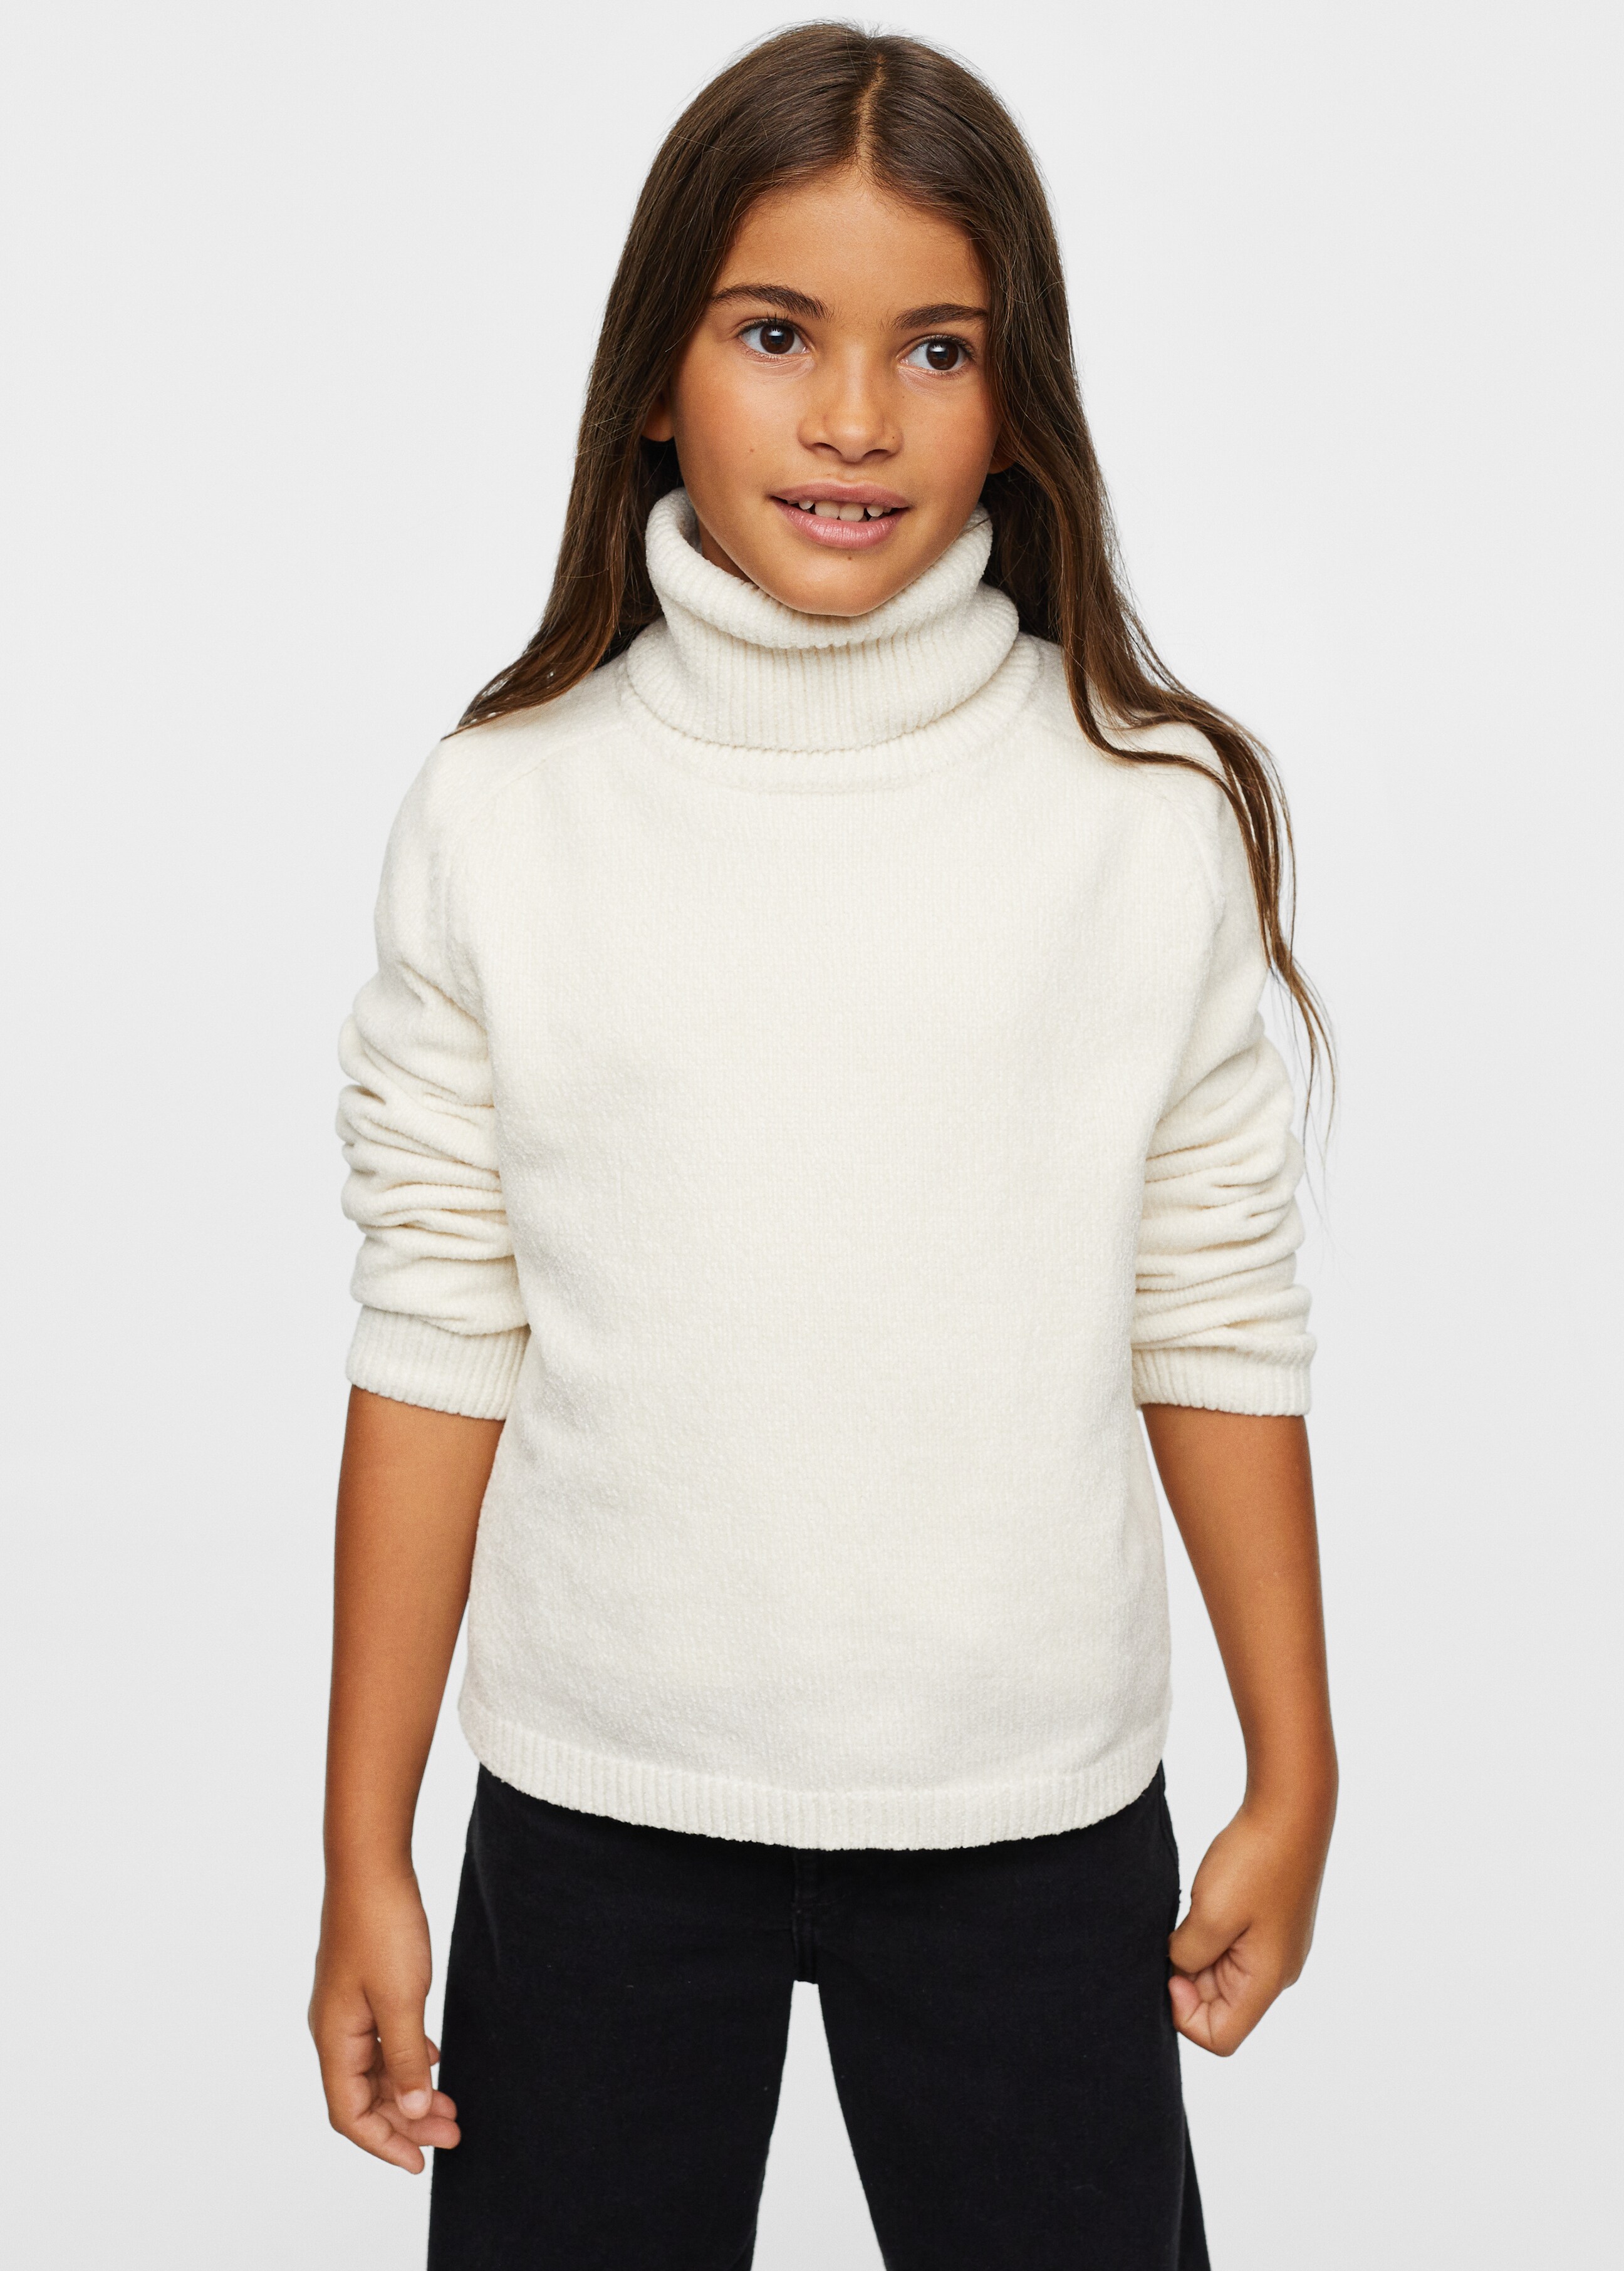 Chenille knit sweater - Medium plane